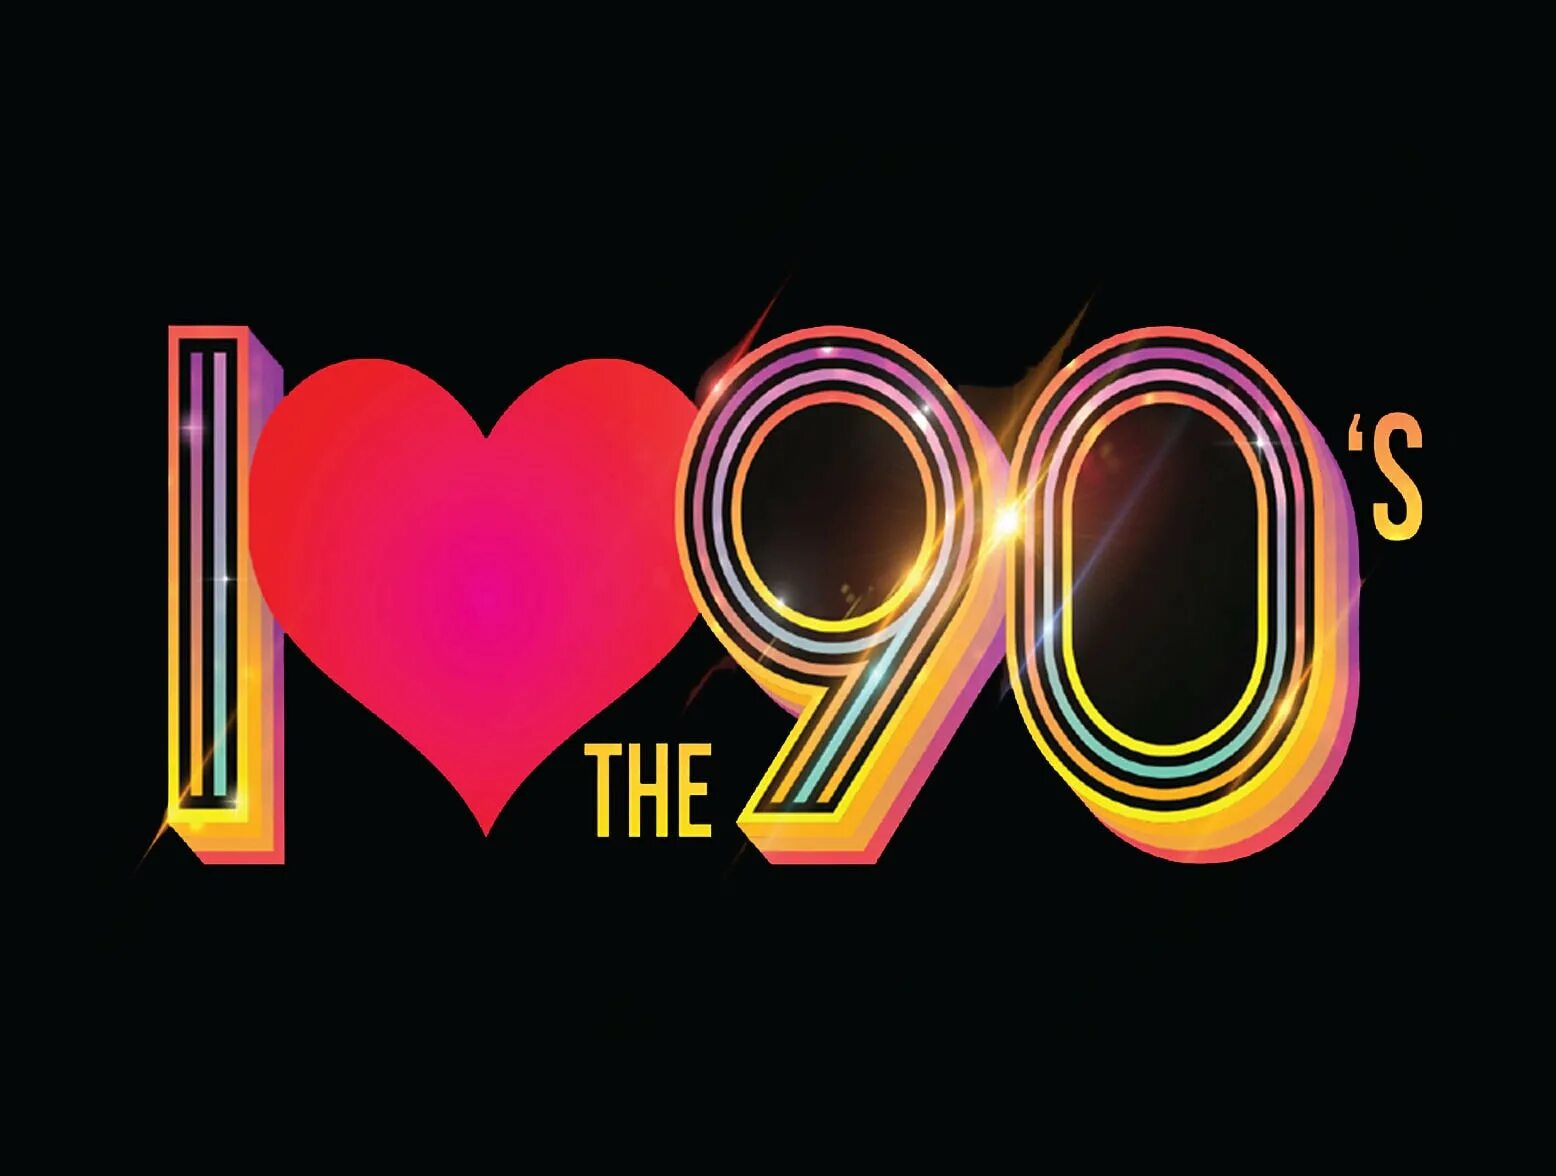 Лове 90. Вечеринка 90-х. I Love 90's. Логотипы 90х. Фон в стиле 90-х.